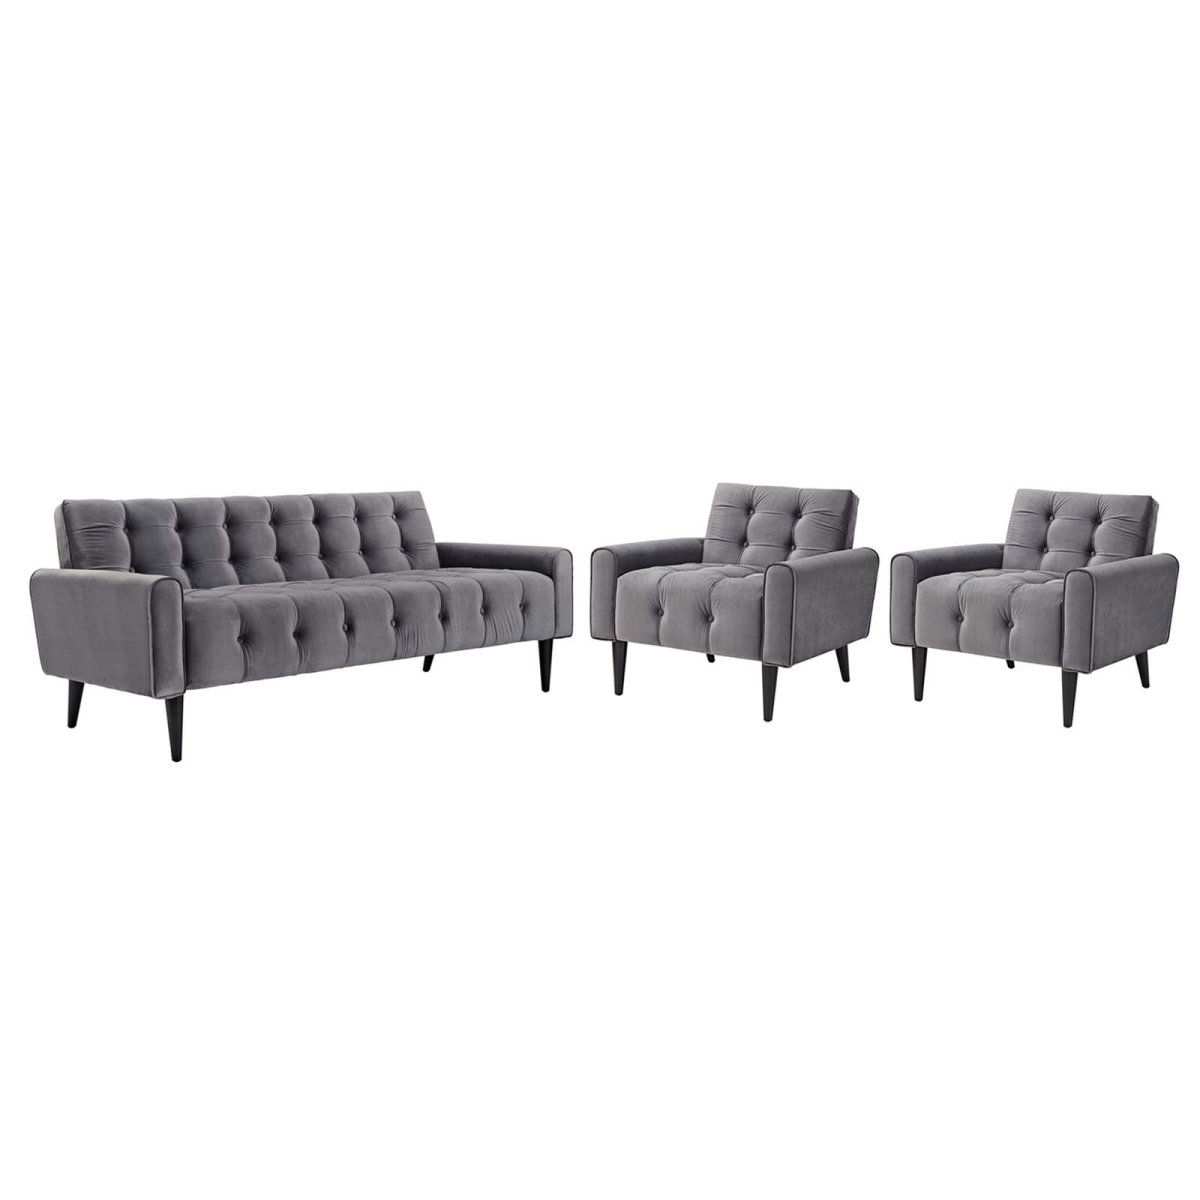 Eei-2970-gry-set Delve Living Room Set Velvet - Gray, 29 X 32 X 31.5 In. - Set Of 3